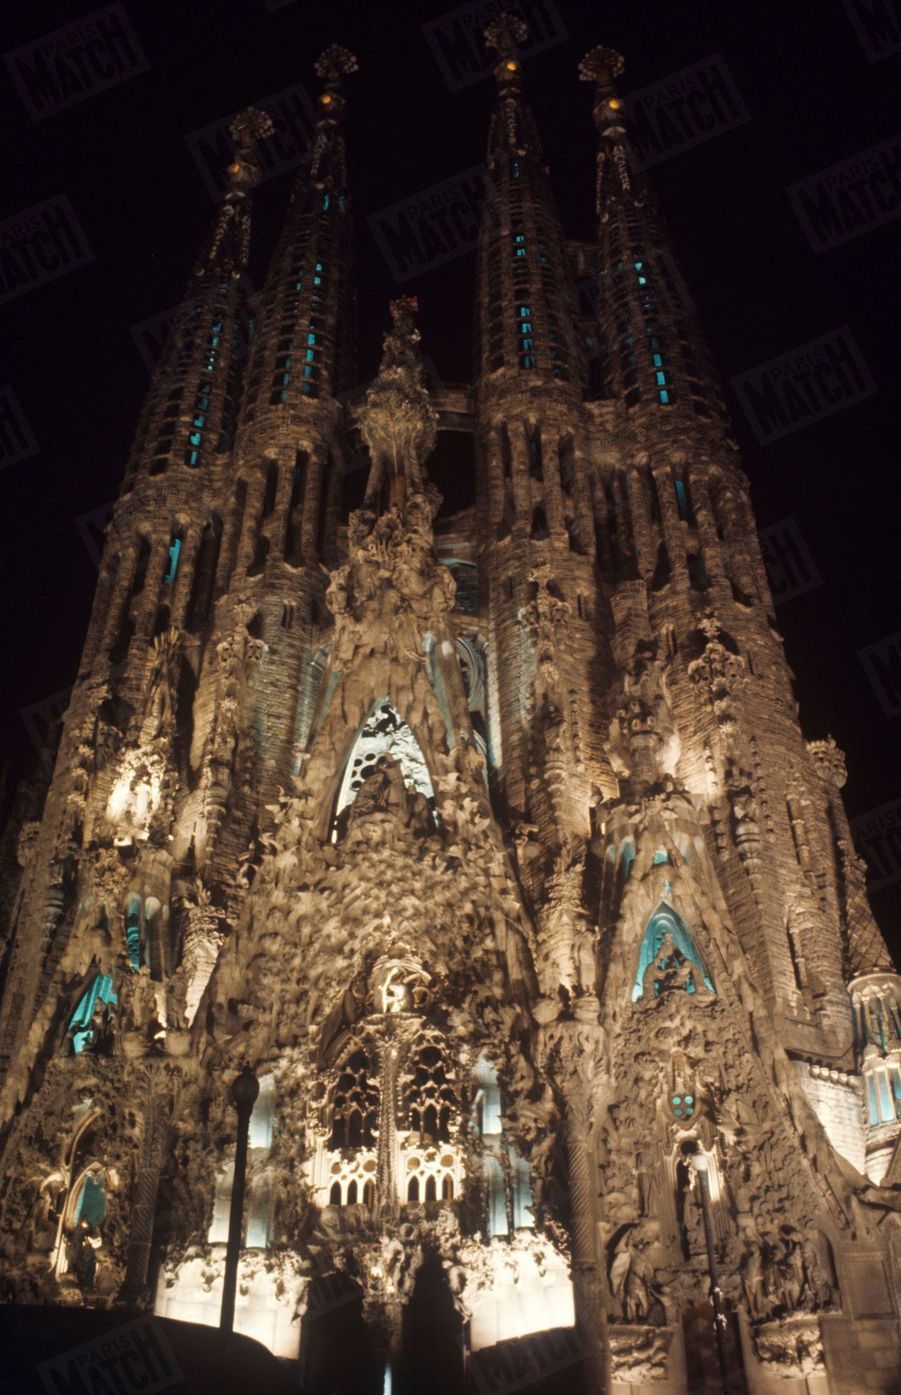 The Secret of the Sagrada Familia by Salvador Comelles